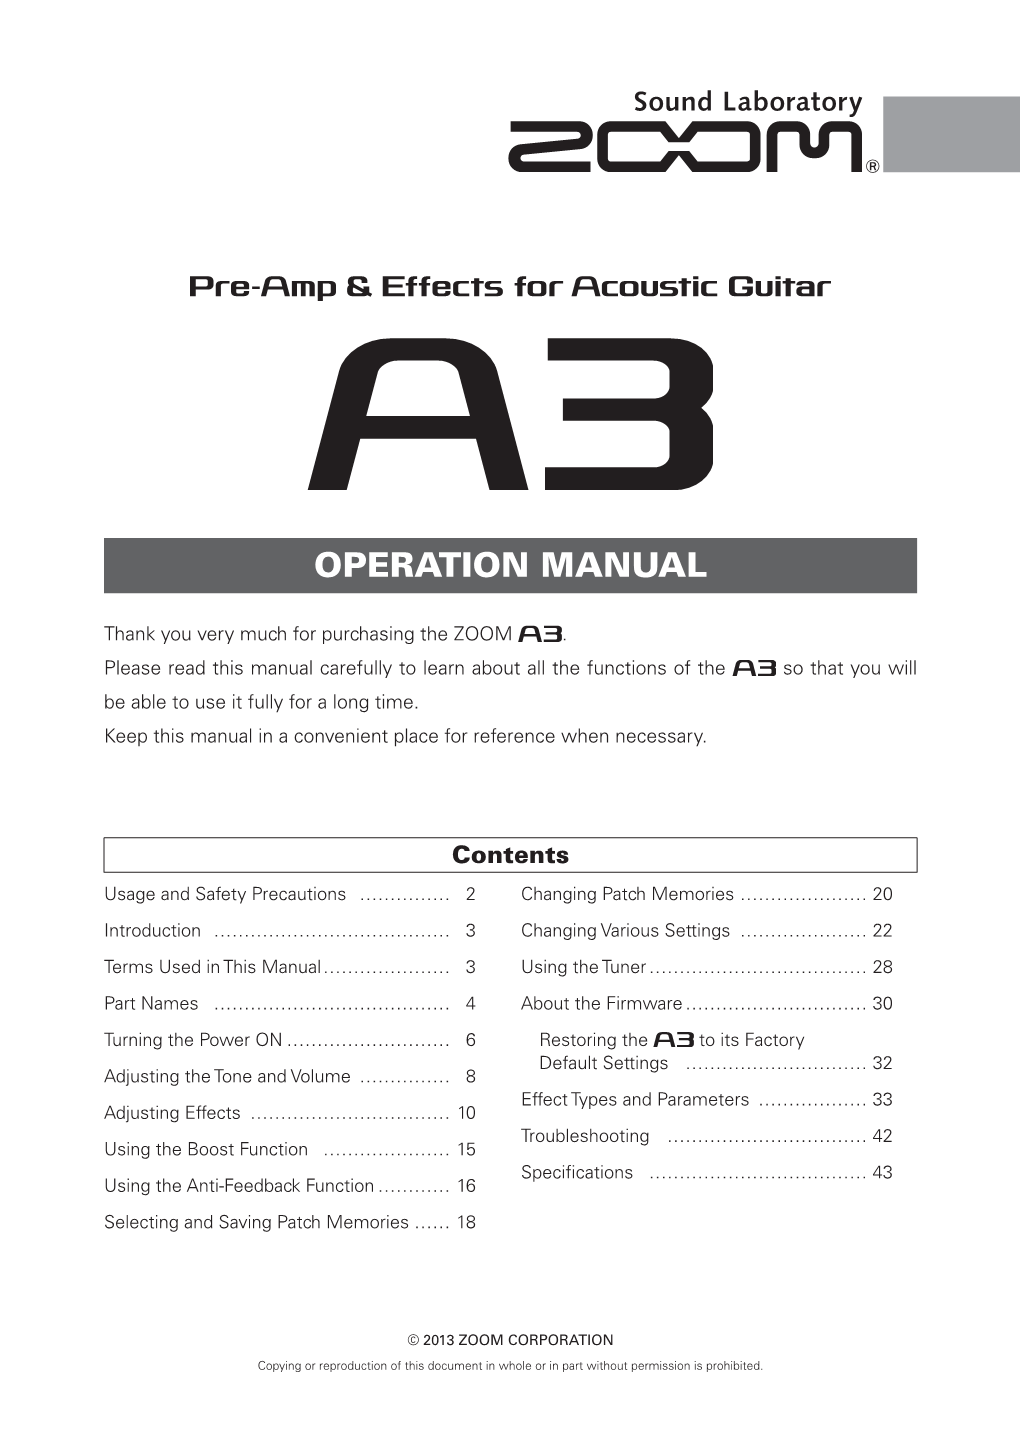 A3 Operation Manual